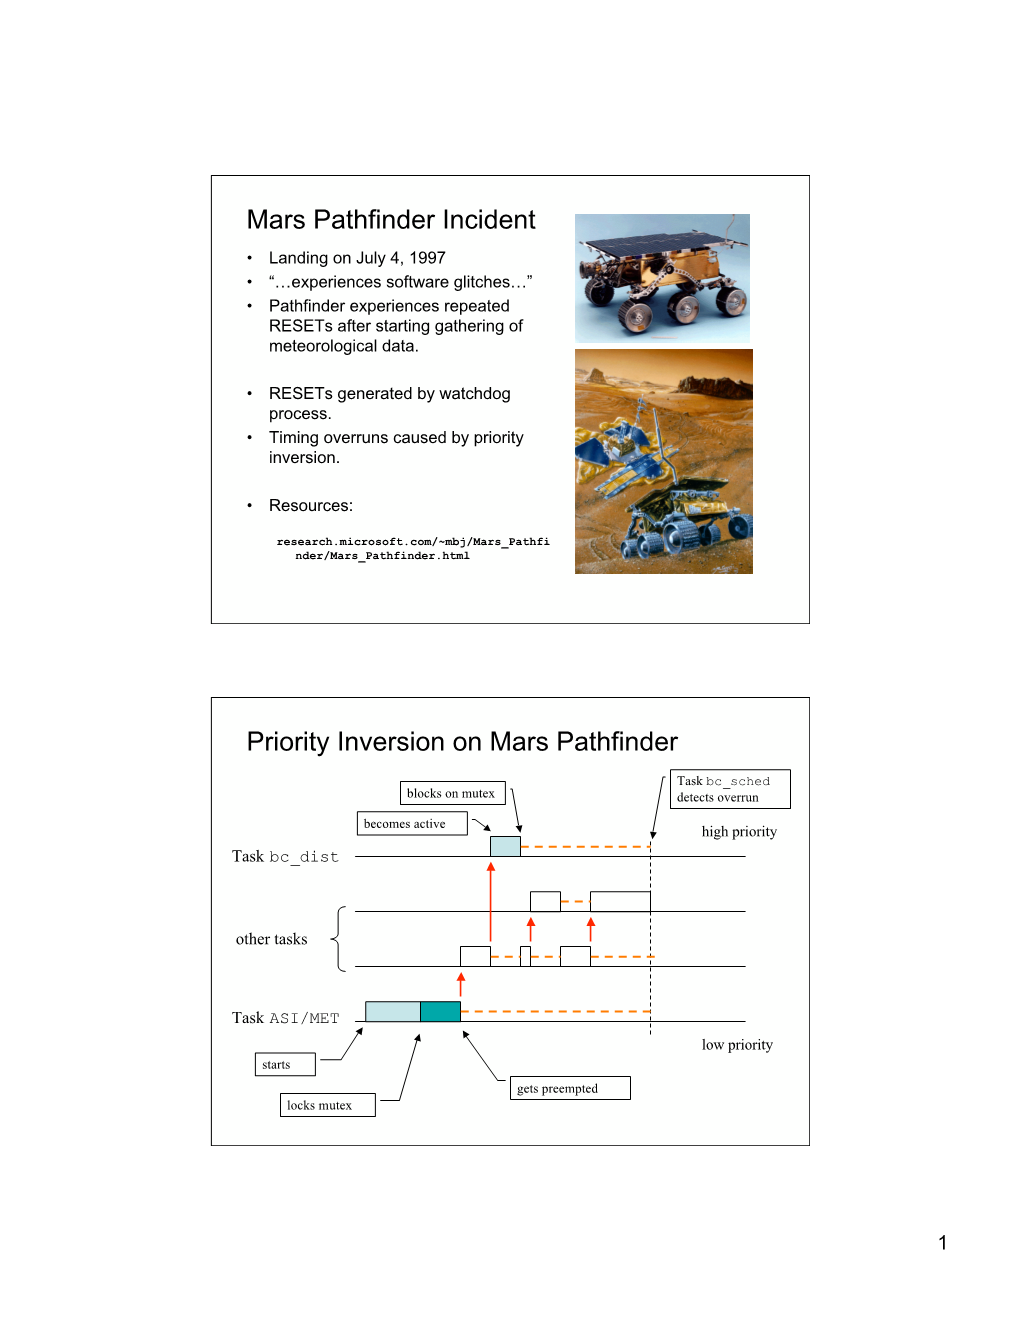 Mars Pathfinder Incident Priority Inversion on Mars Pathfinder